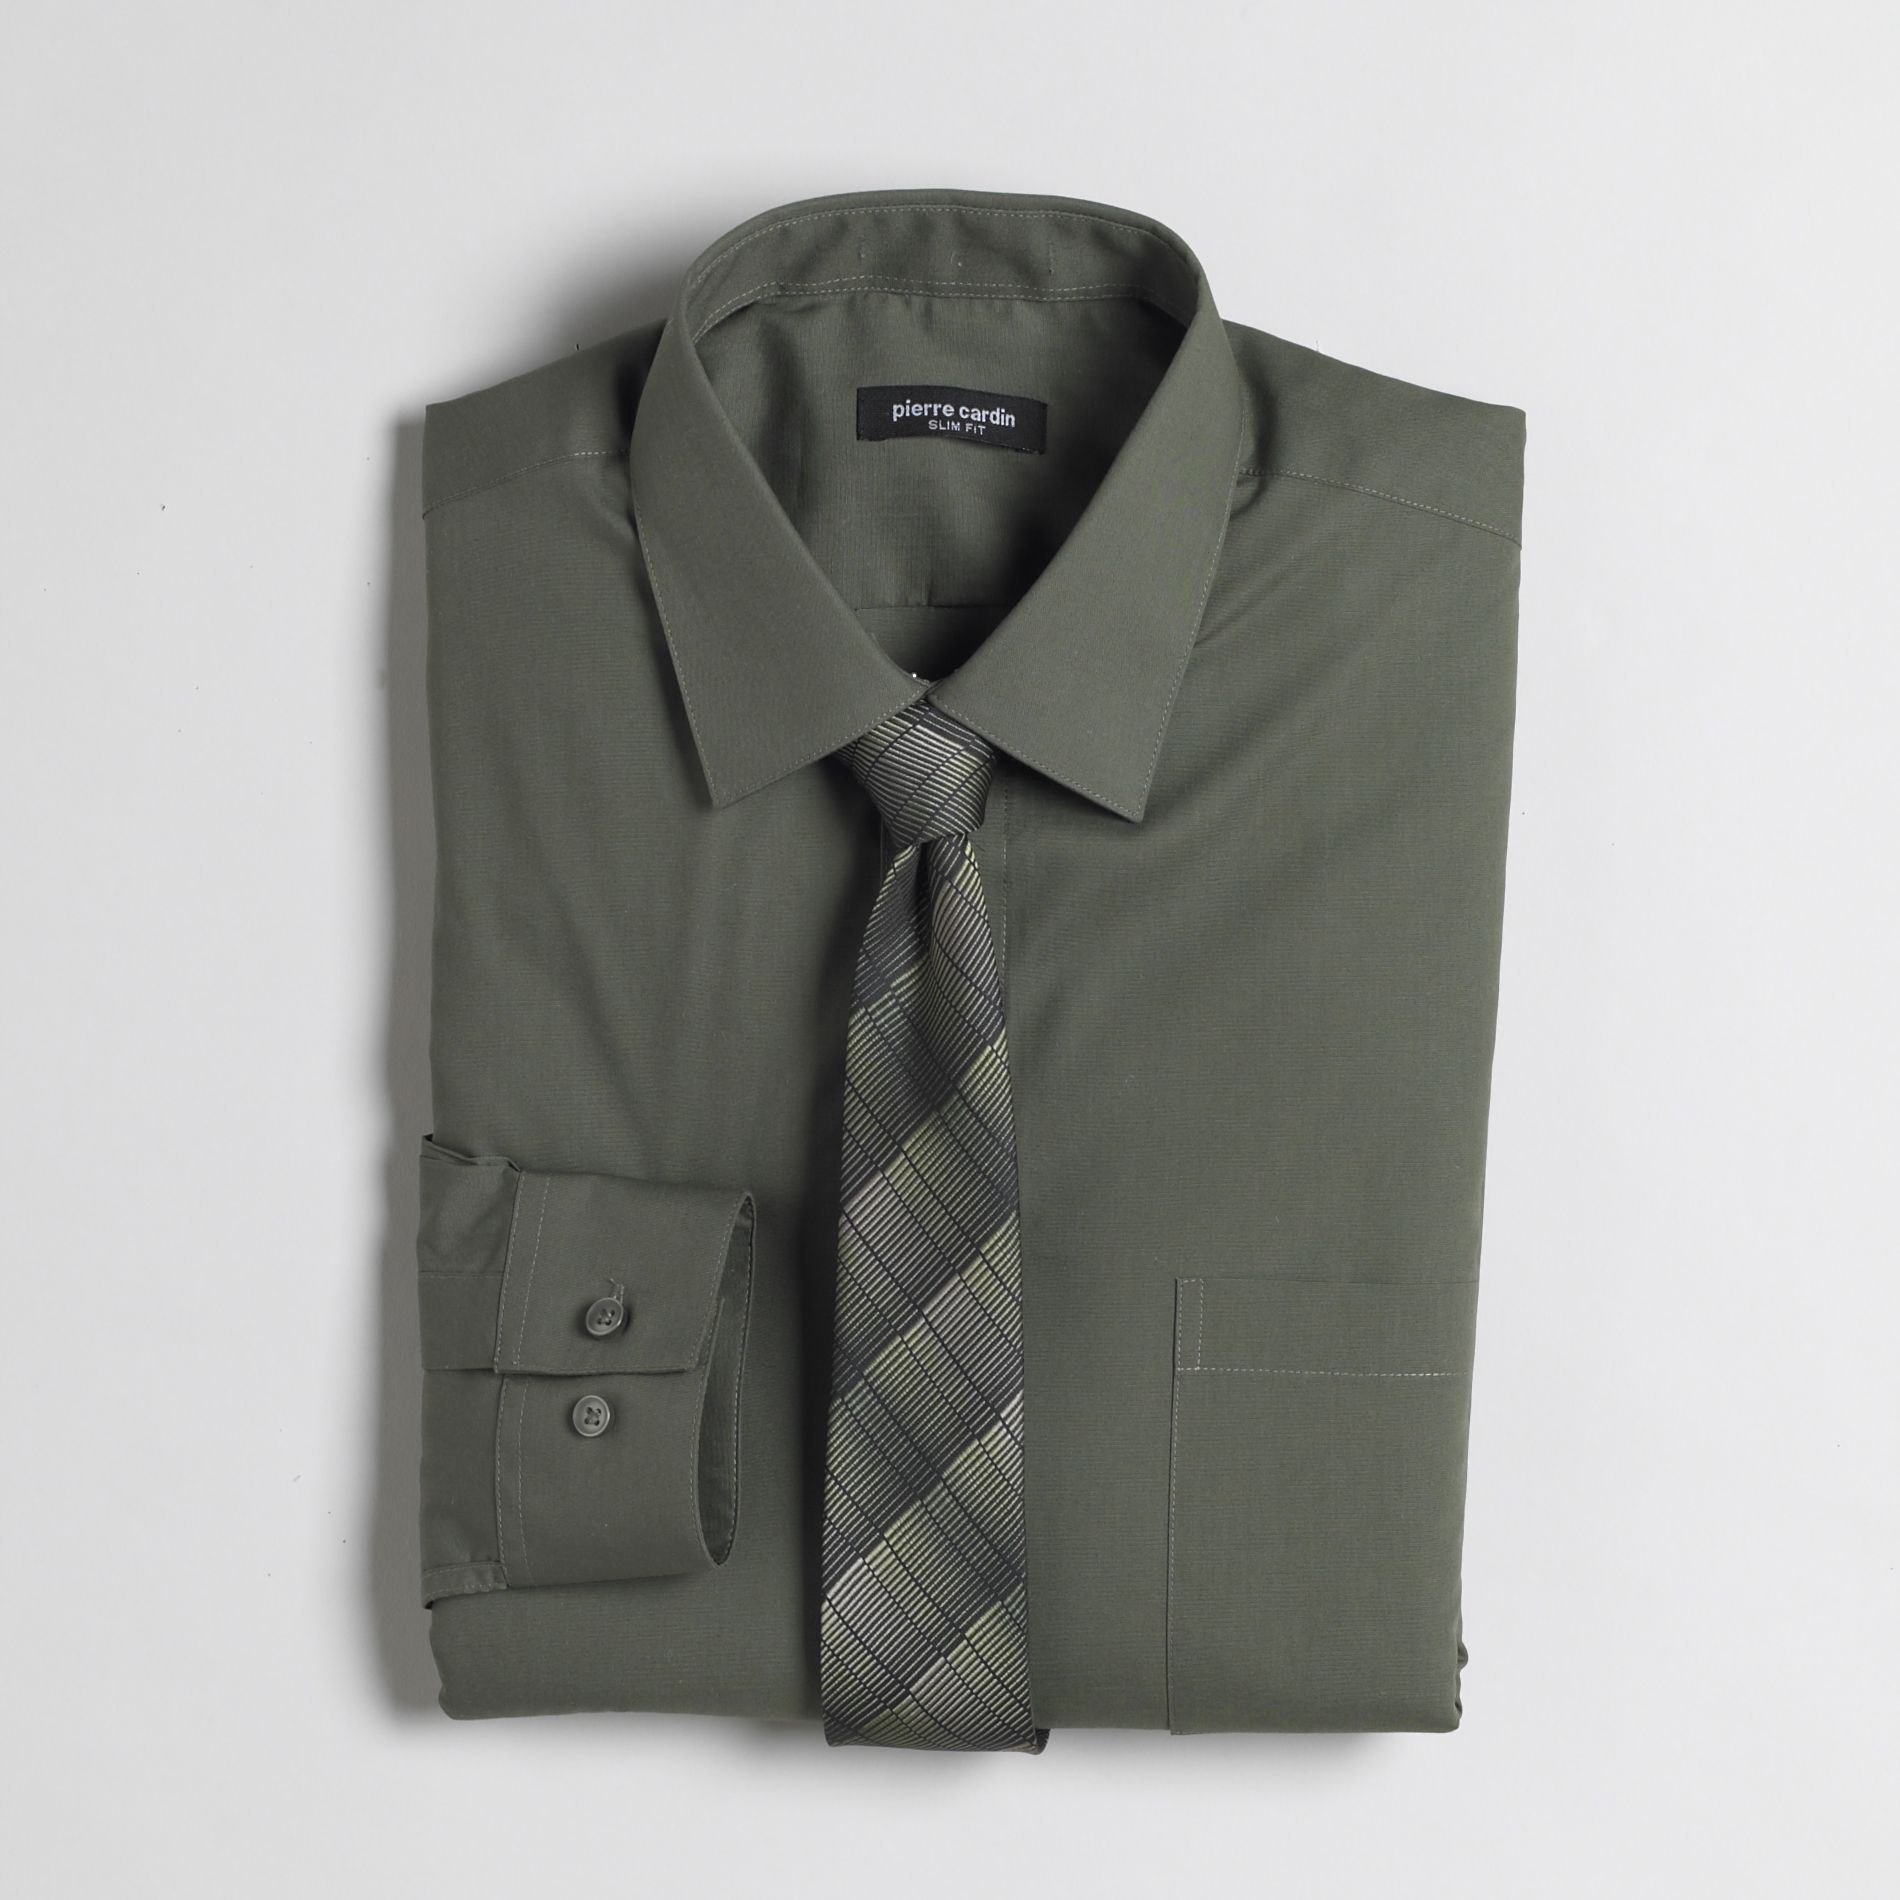 Pierre Cardin Men's Dress Shirt & Tie Set